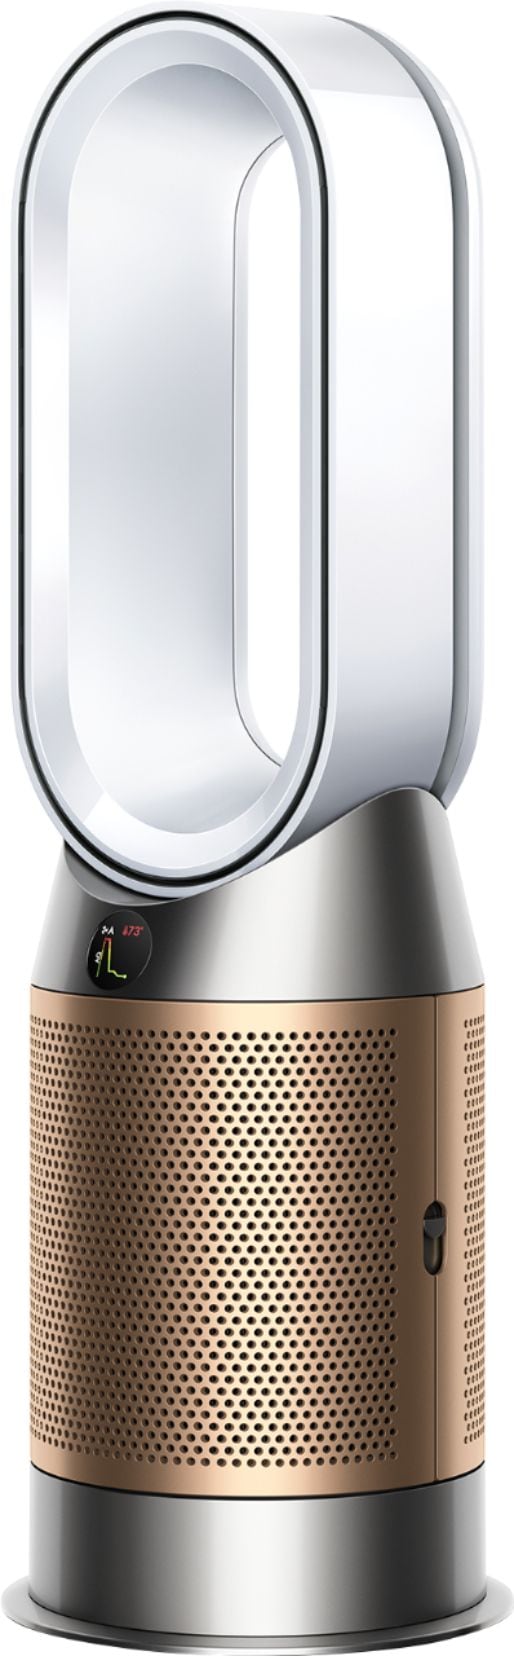 Dyson - Purifier Hot+Cool Formaldehyde - HP09 - Smart Tower Air Purifier, Heater and Fan - White/Gold_1